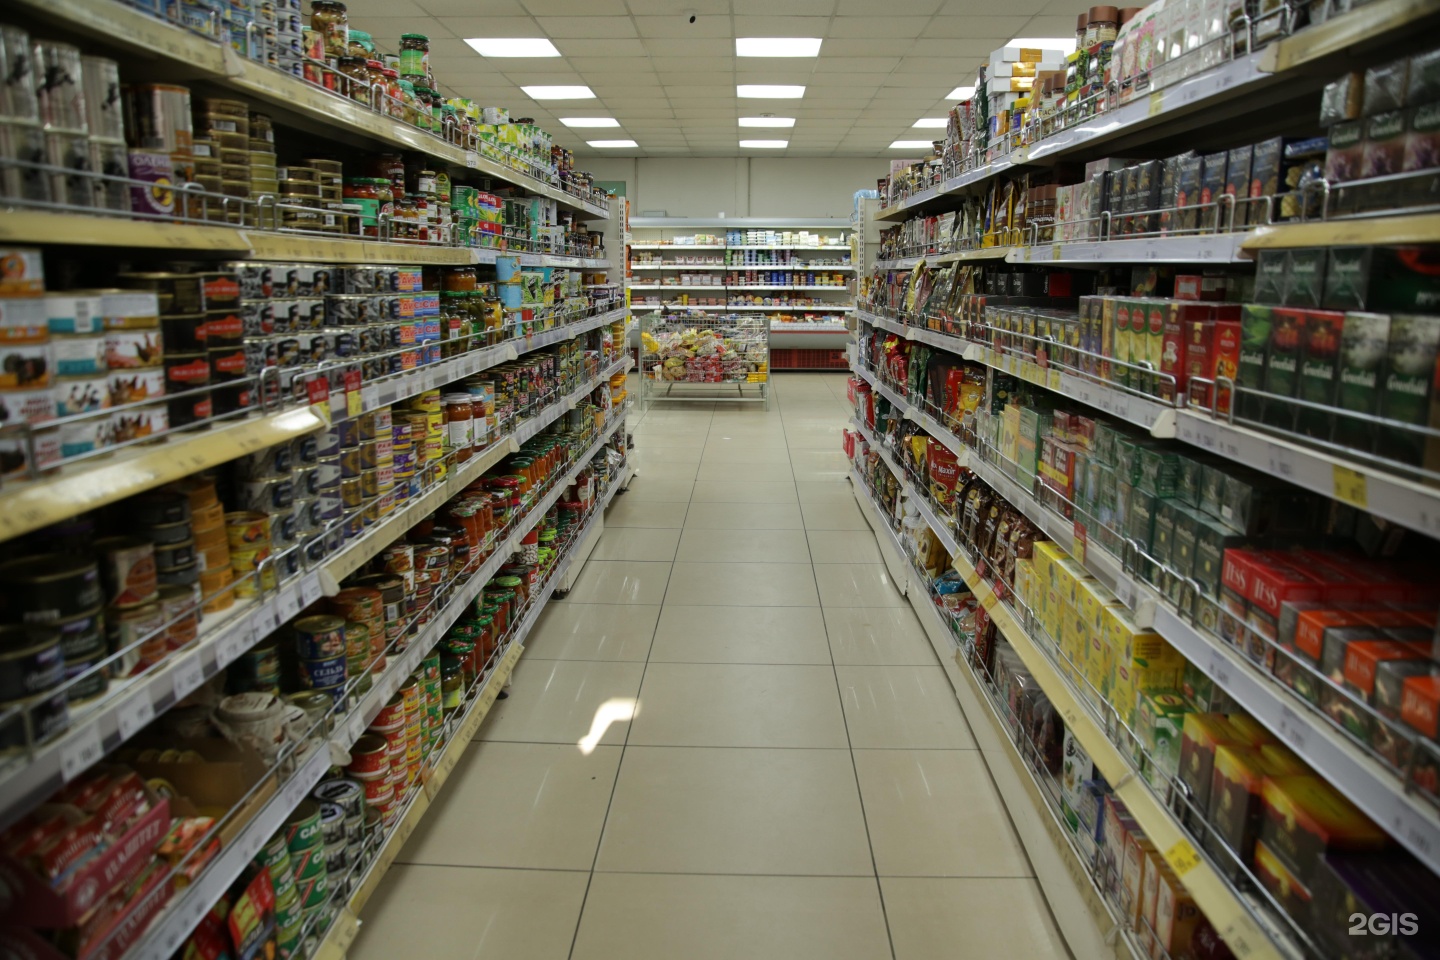 Русский супермаркет